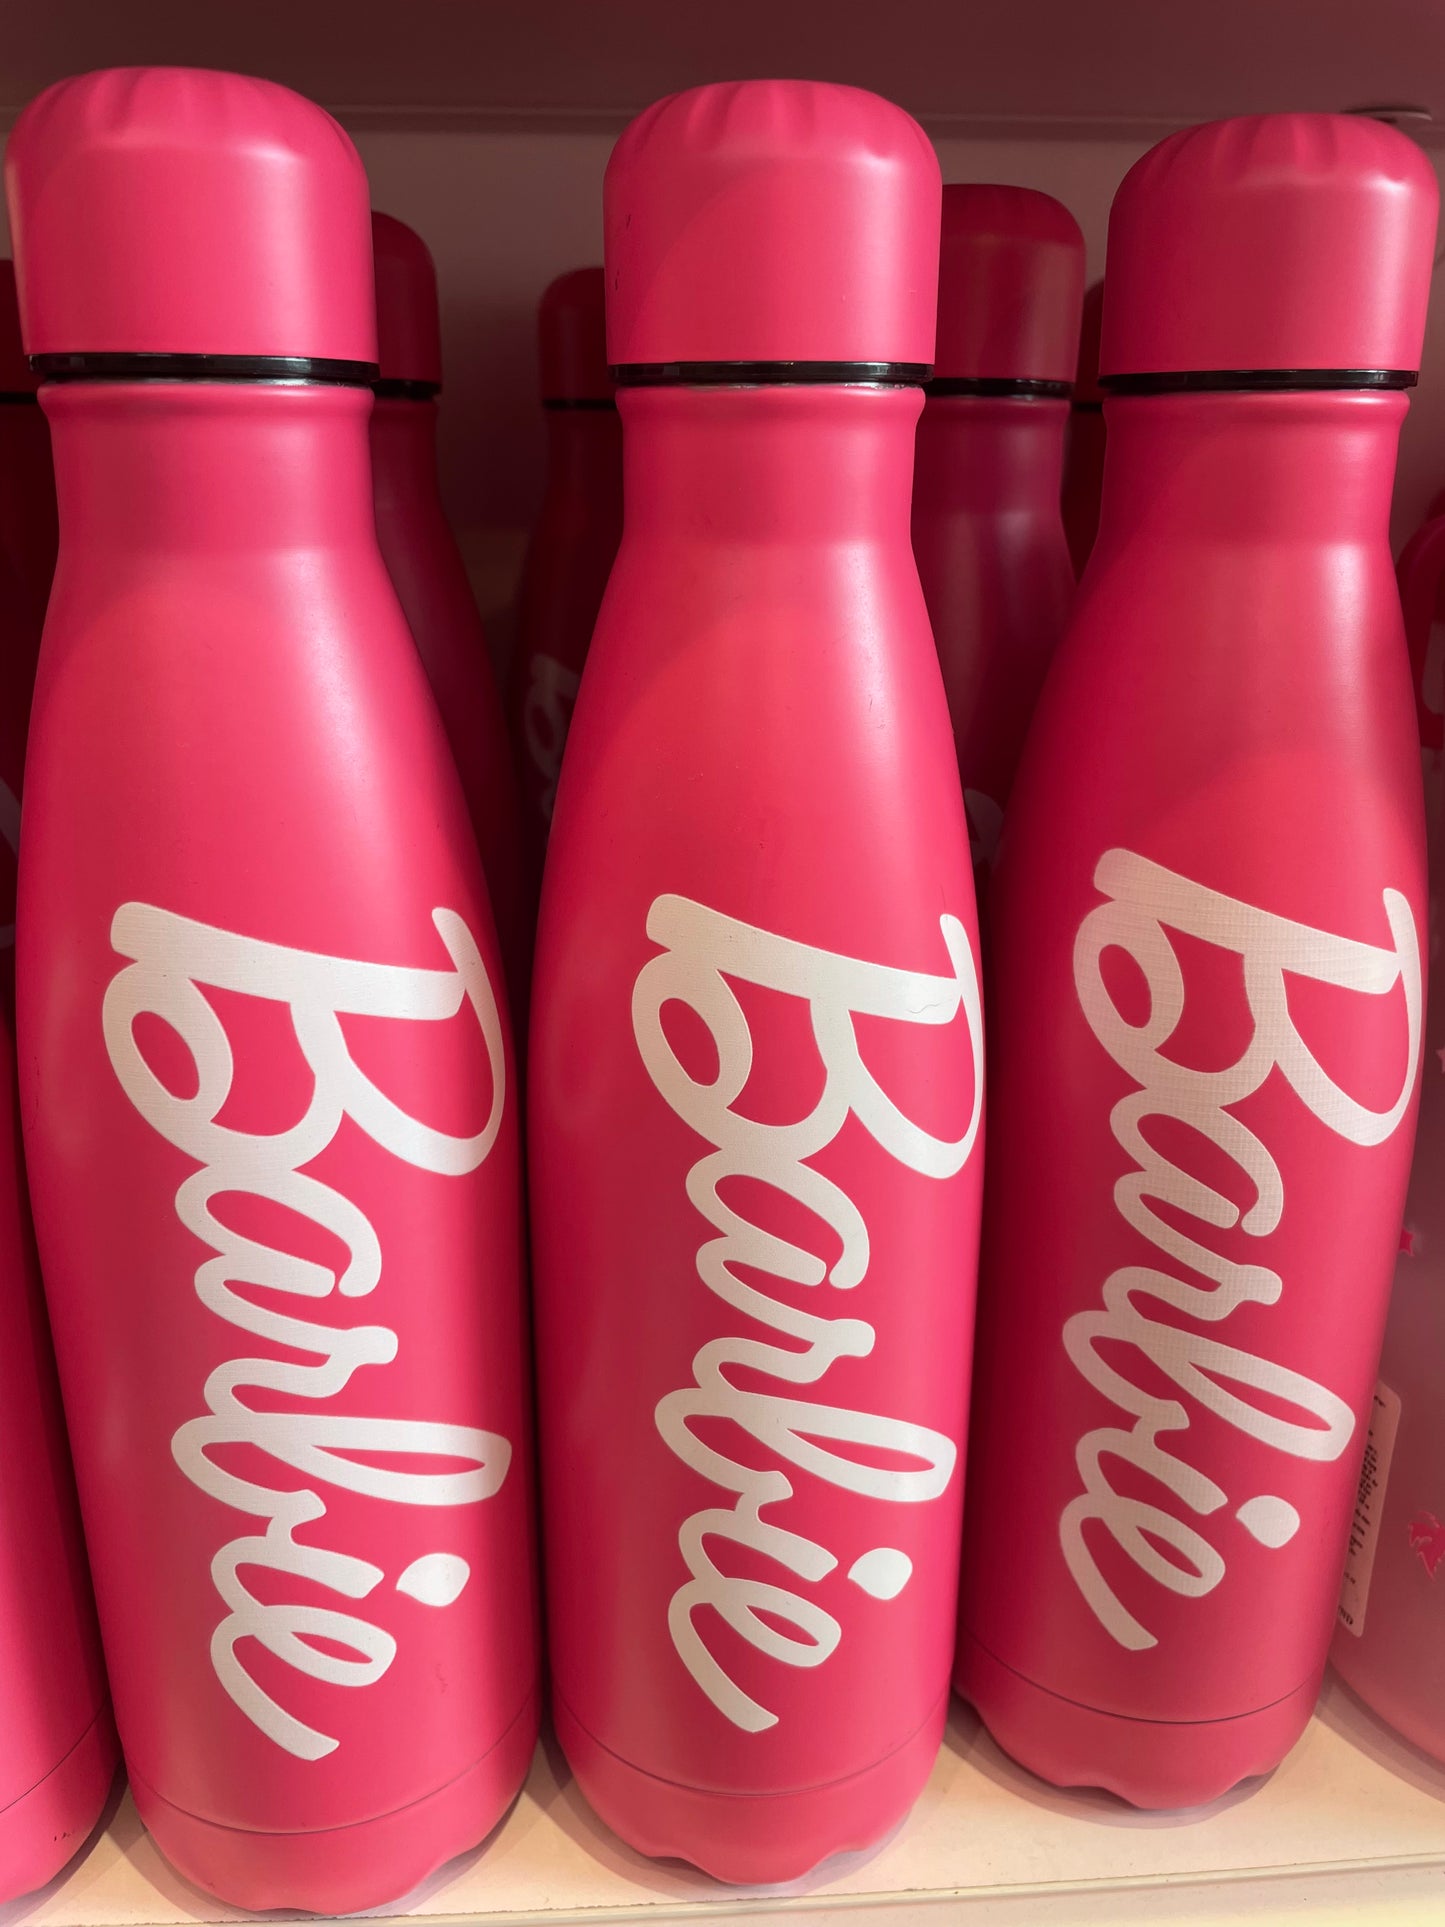 MINISO Barbie Series Water bottle